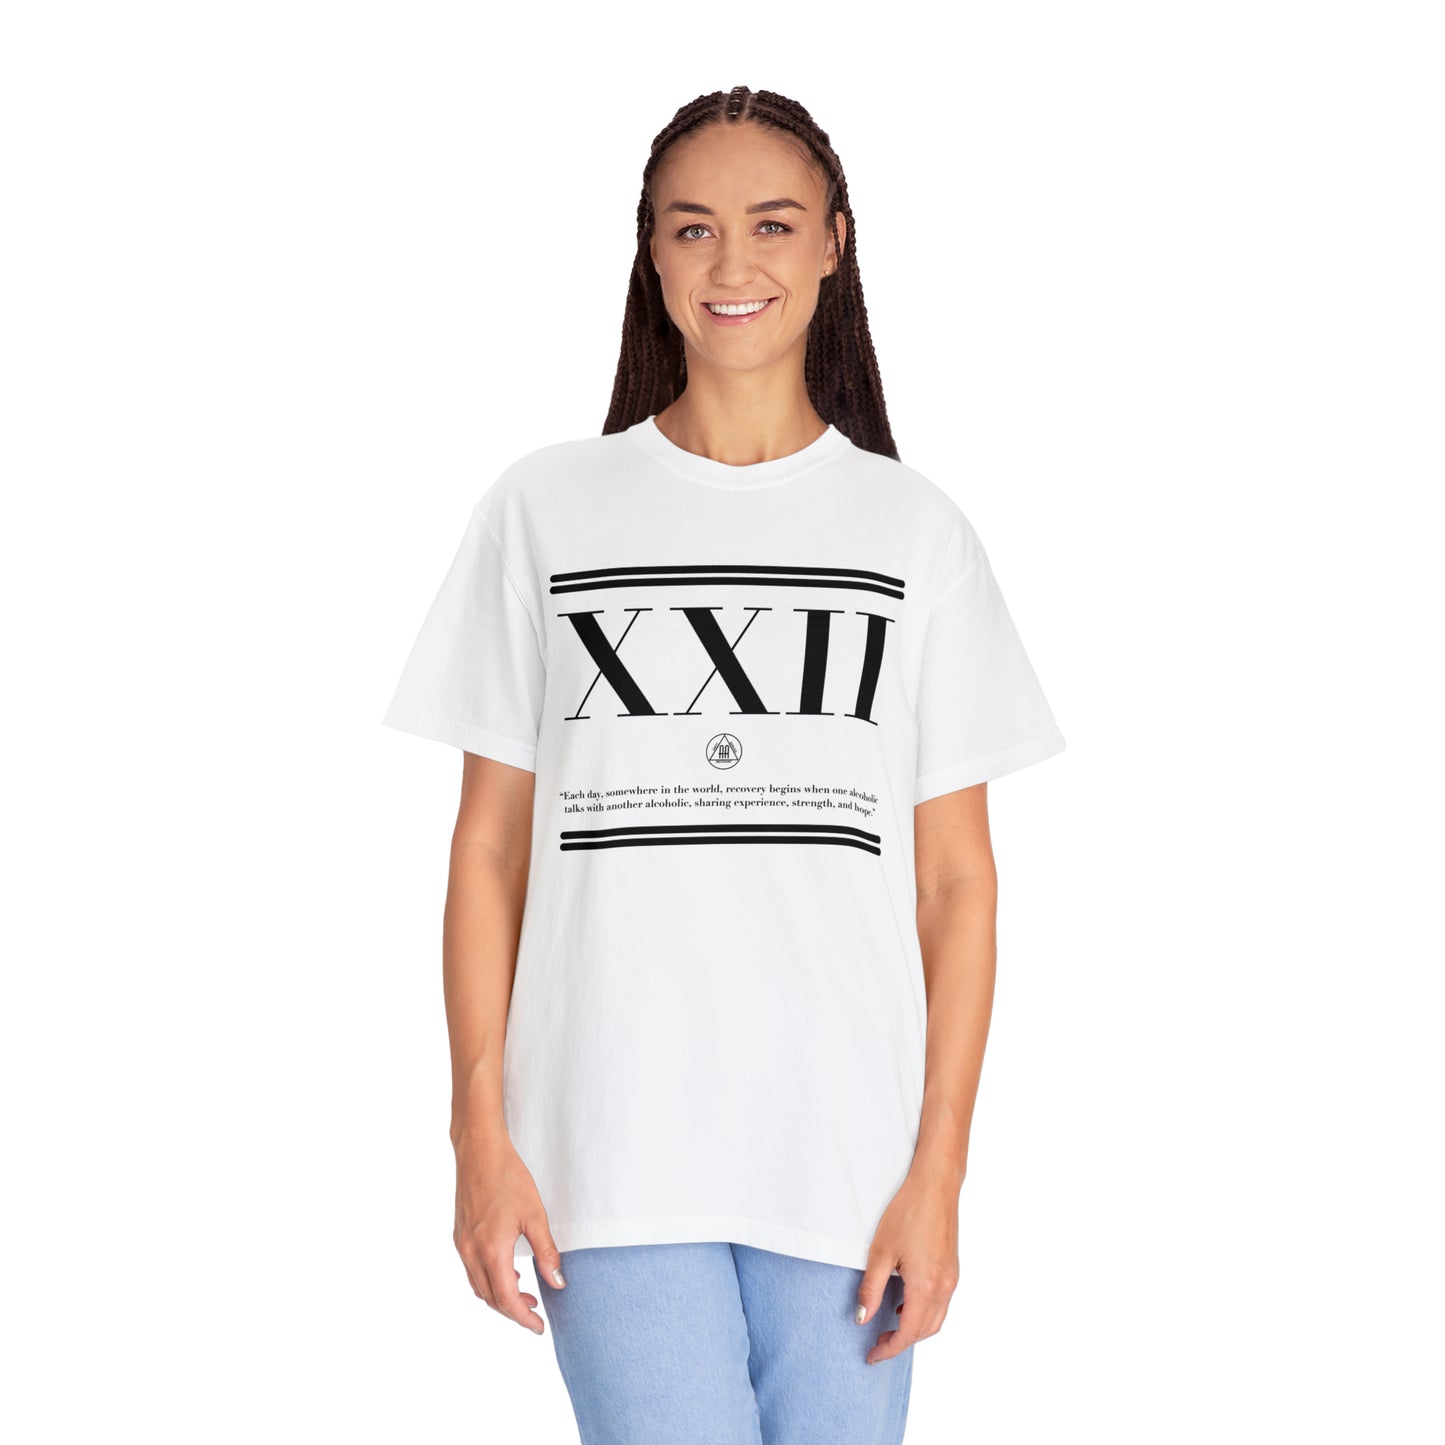 Recovery Begins XXII T-shirt